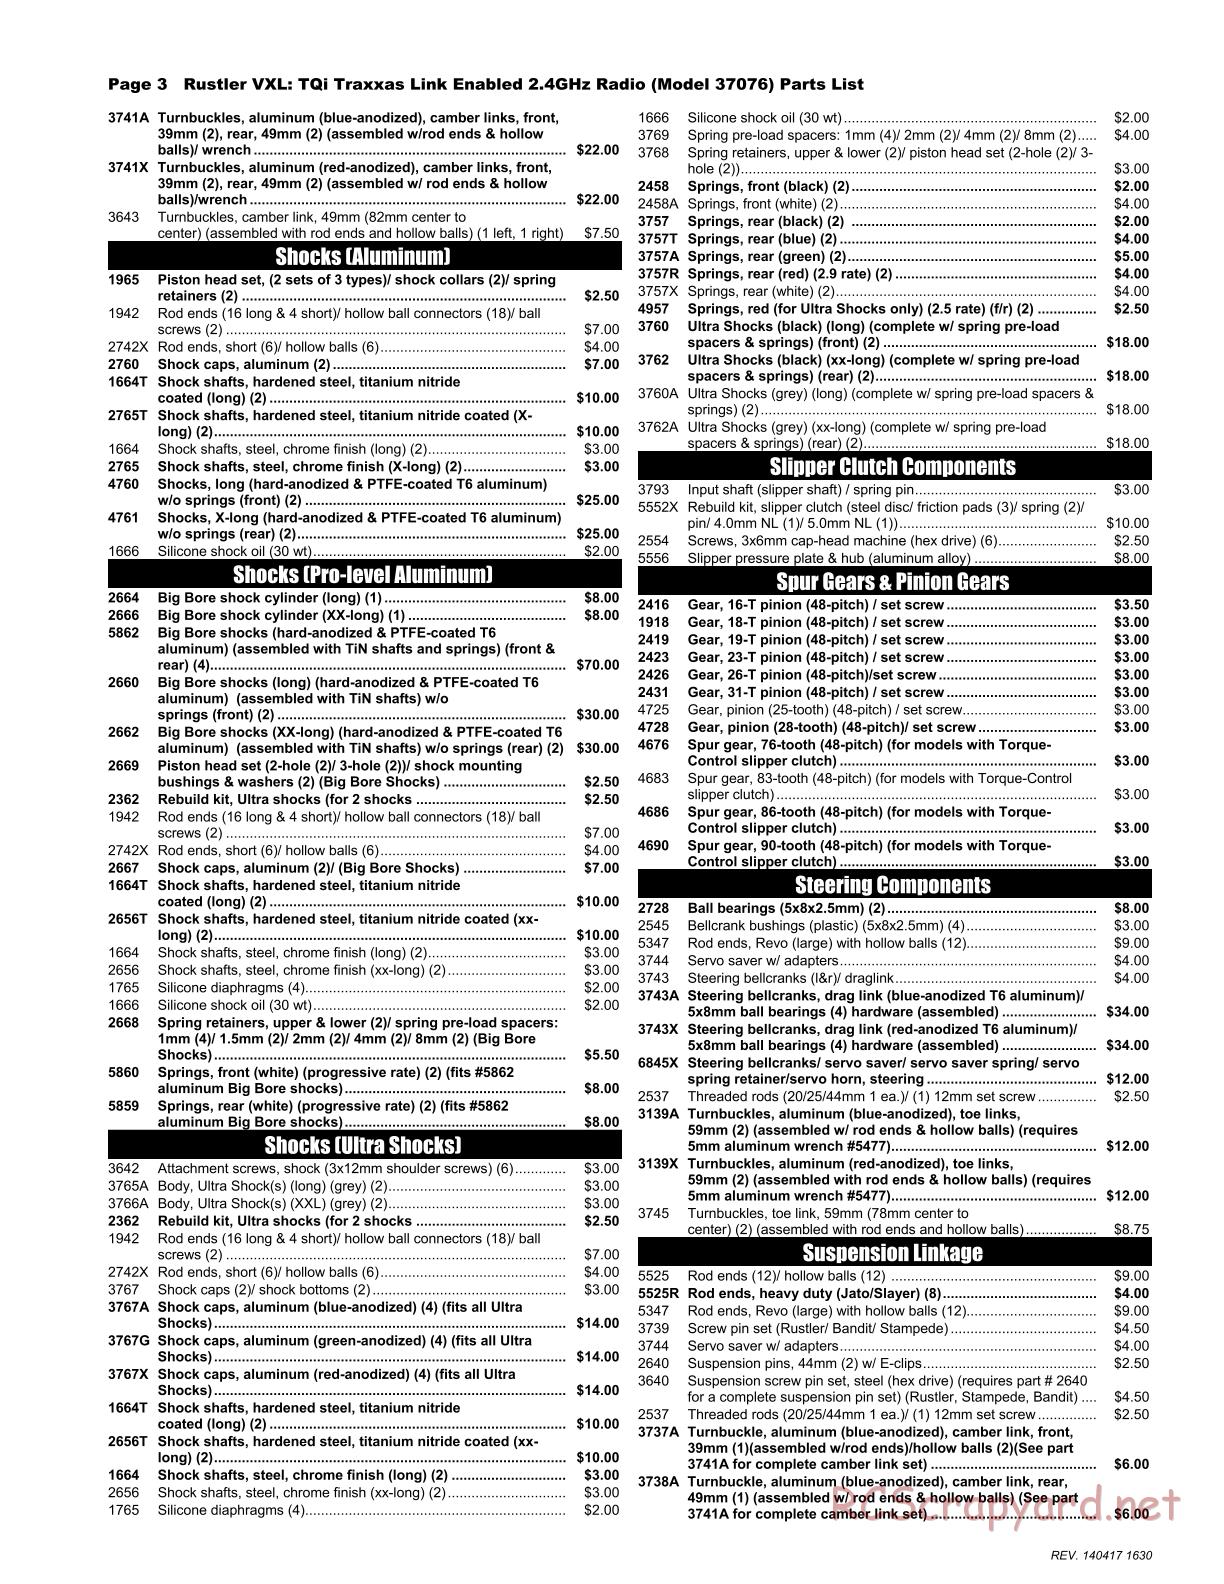 Traxxas - Rustler VXL (2014) - Parts List - Page 3